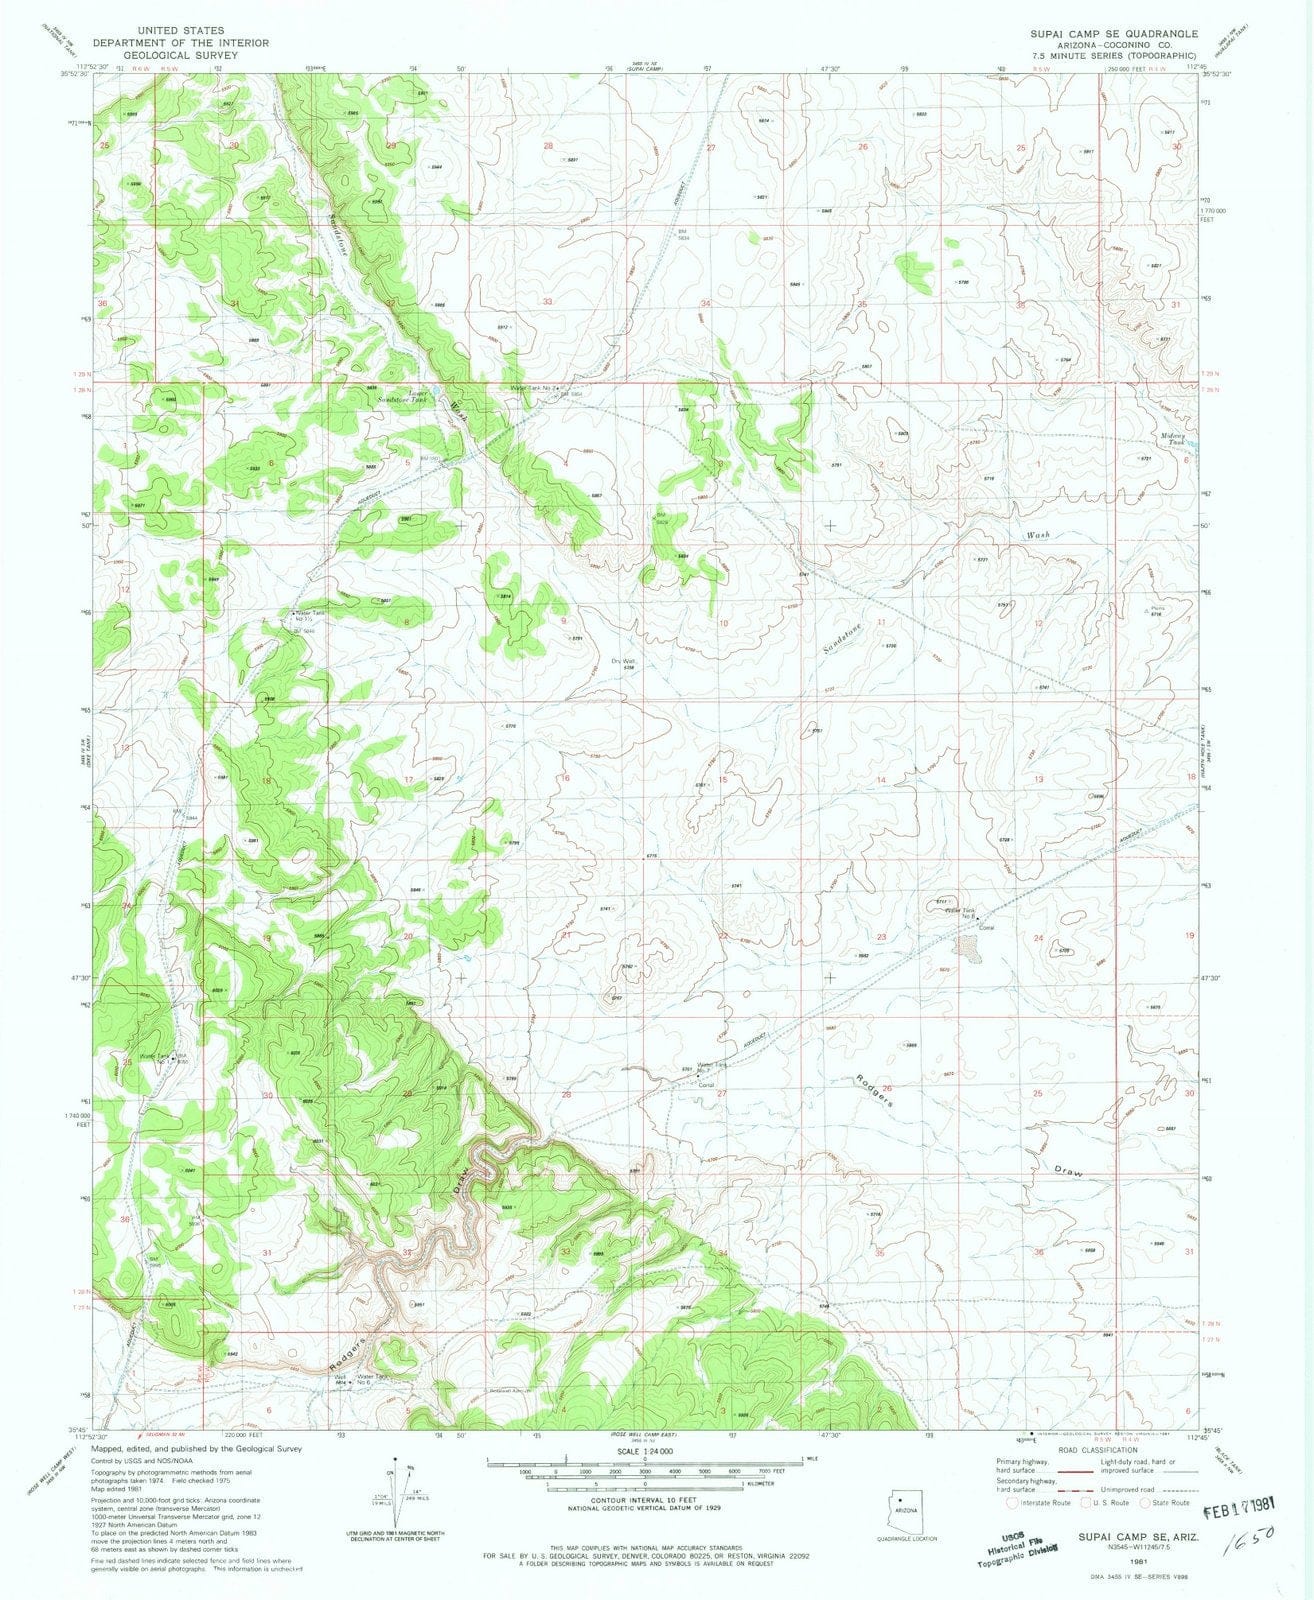 1981 Supai Camp, AZ - Arizona - USGS Topographic Map